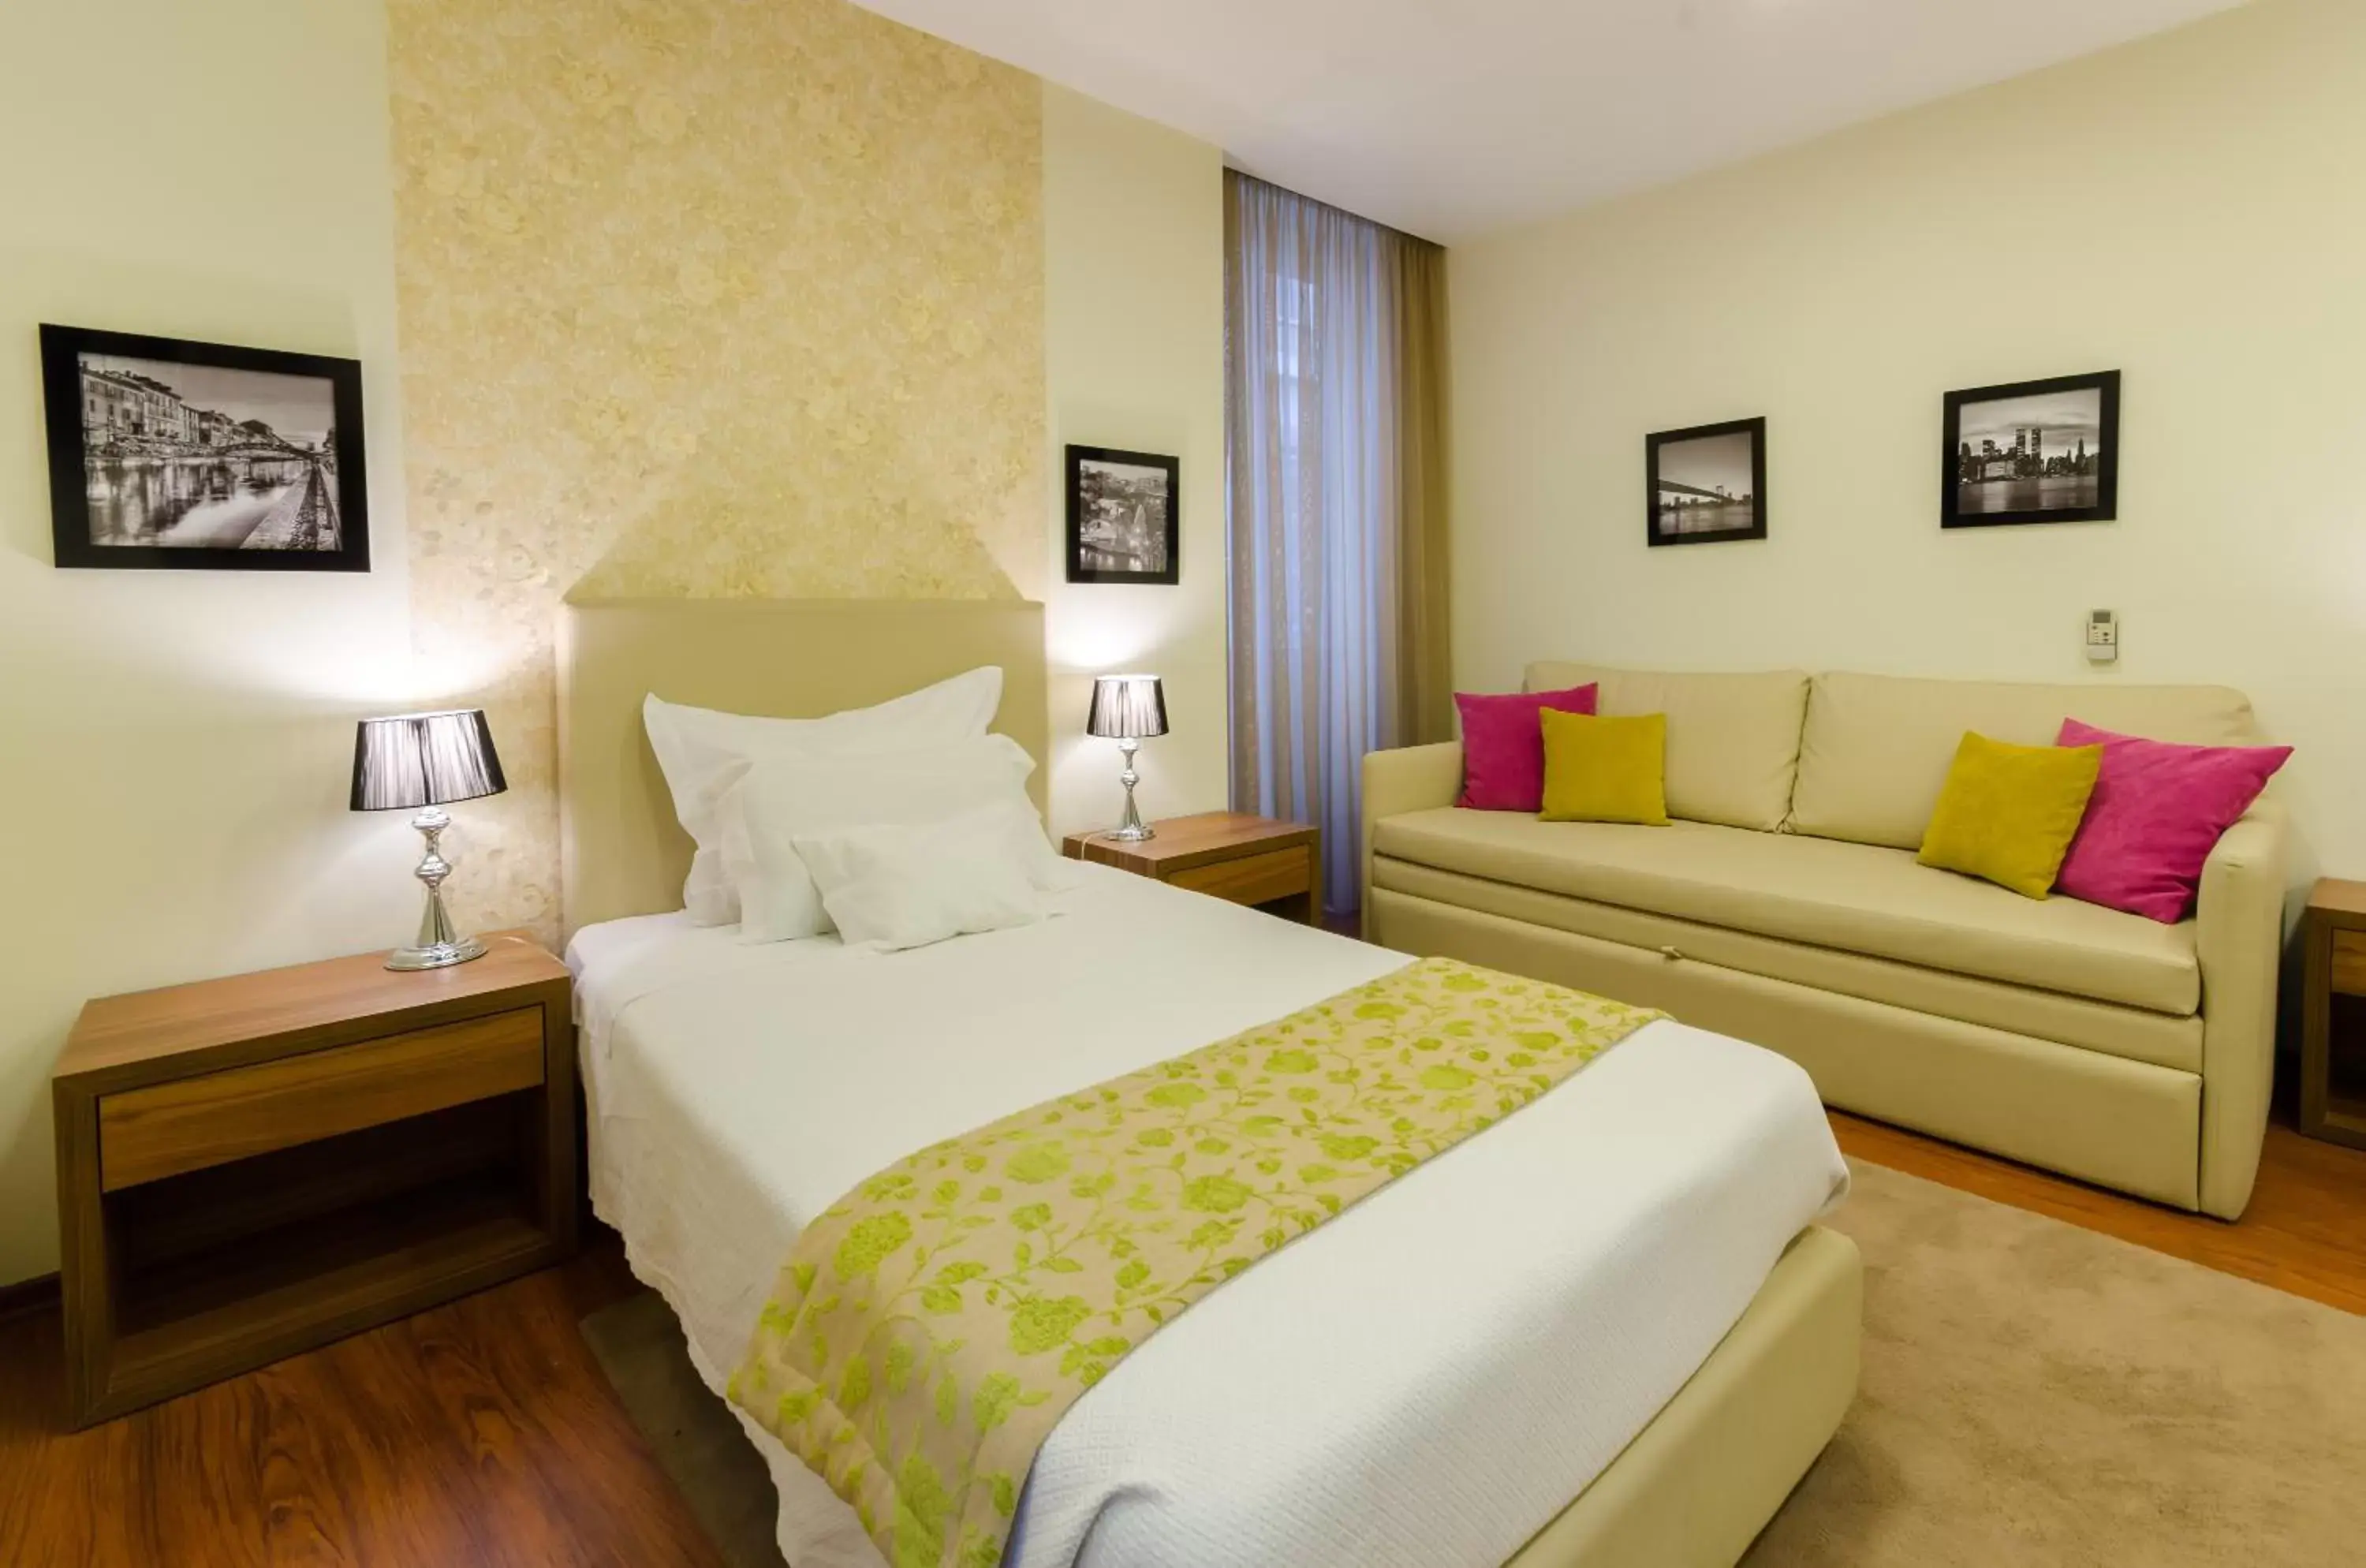 Quadruple Room in Hotel Borges Chiado